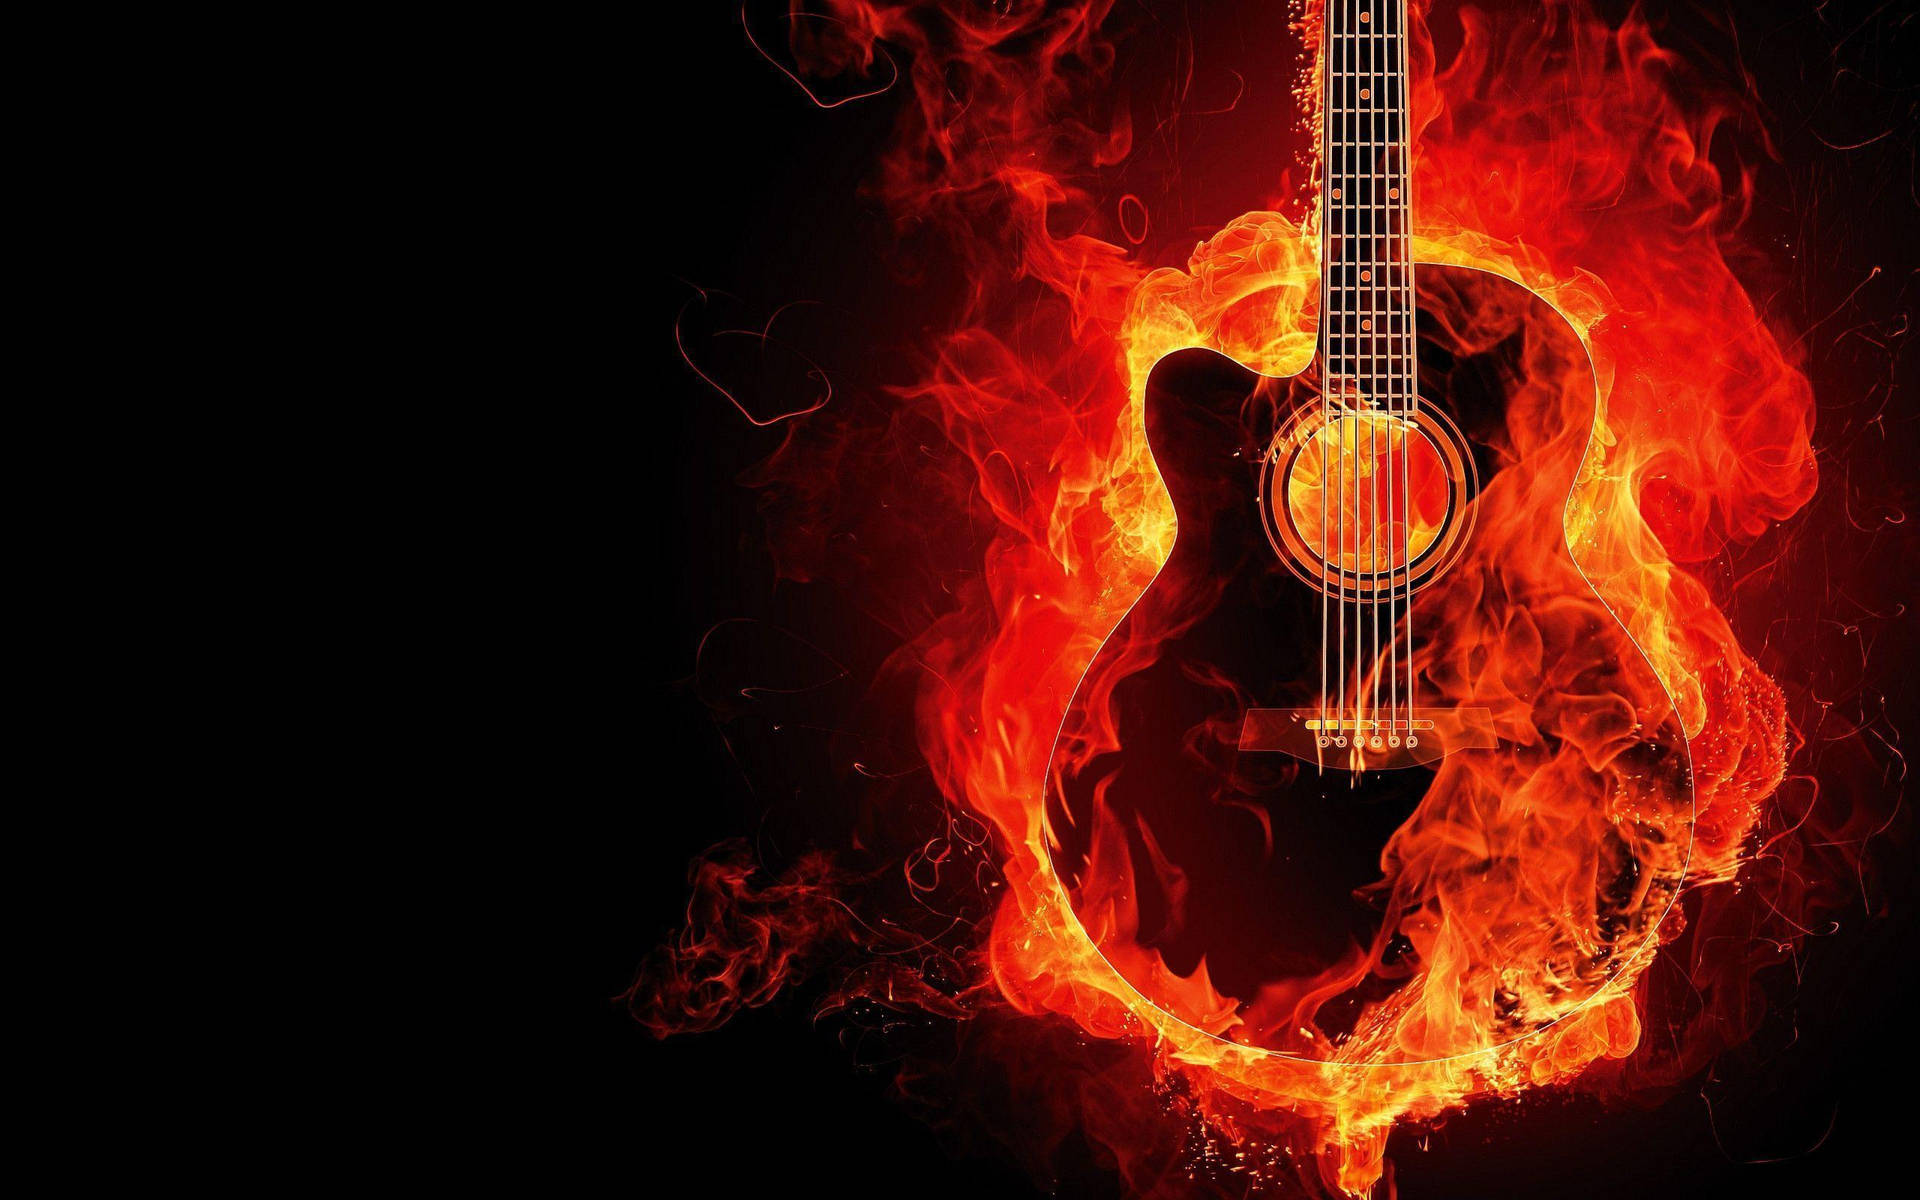 Guitar Flaming Fire Background Wallpaper